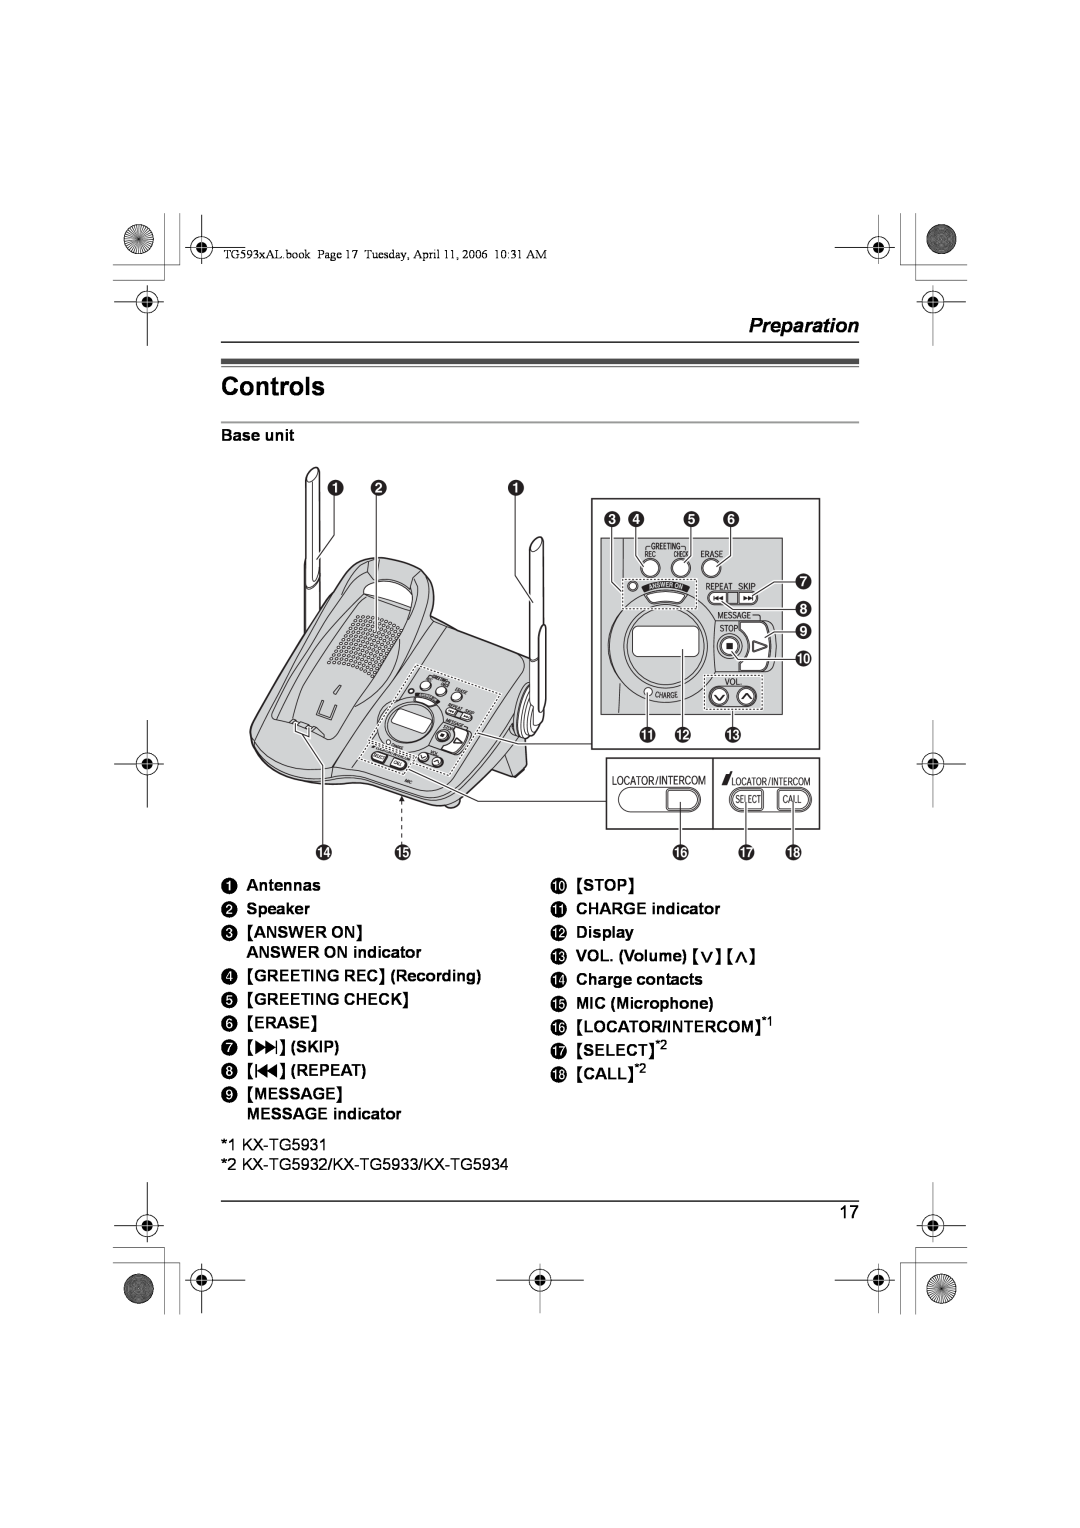 Panasonic KX-TG5932AL Controls, Preparation, Base unit A B A, A Antennas, J Stop, B Speaker, K CHARGE indicator, L Display 